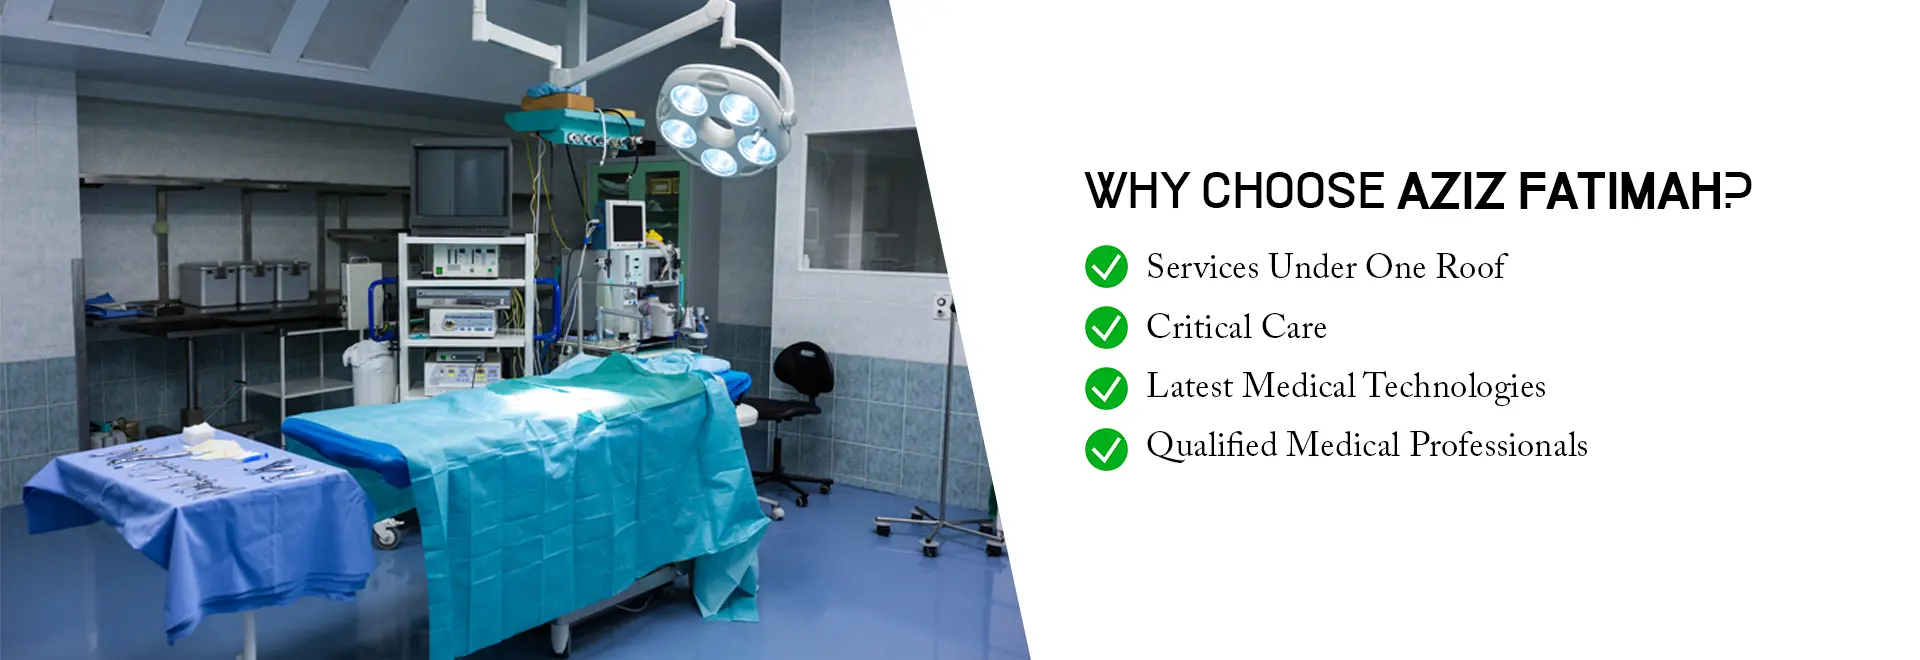 Why You Should Choose Aziz Fatimah Hospital (AFH)